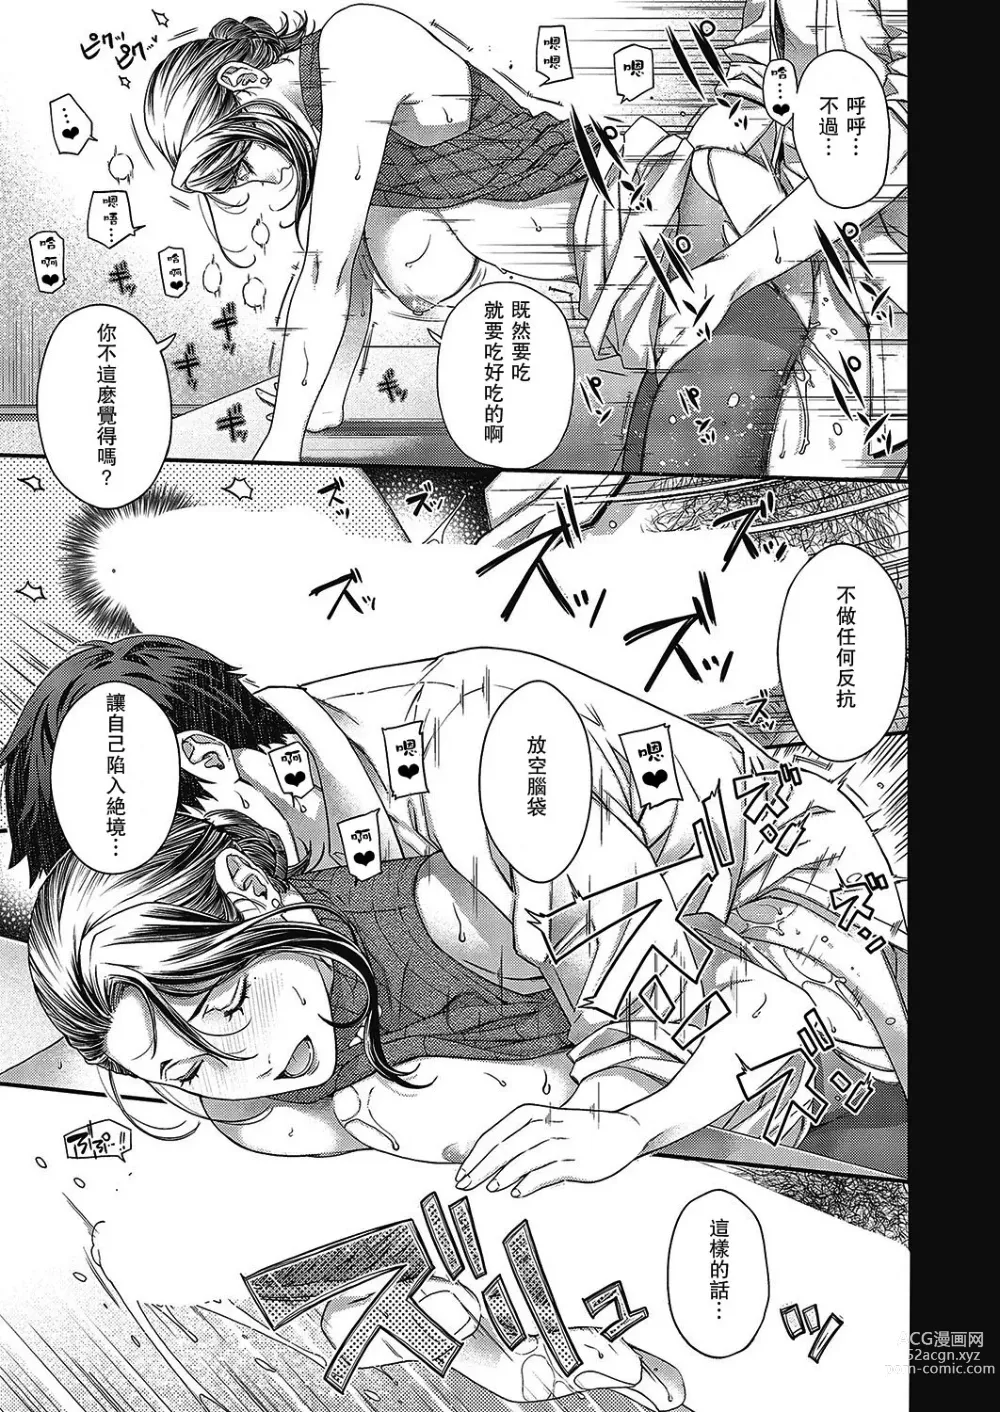 Page 35 of manga Senjou no Kemono